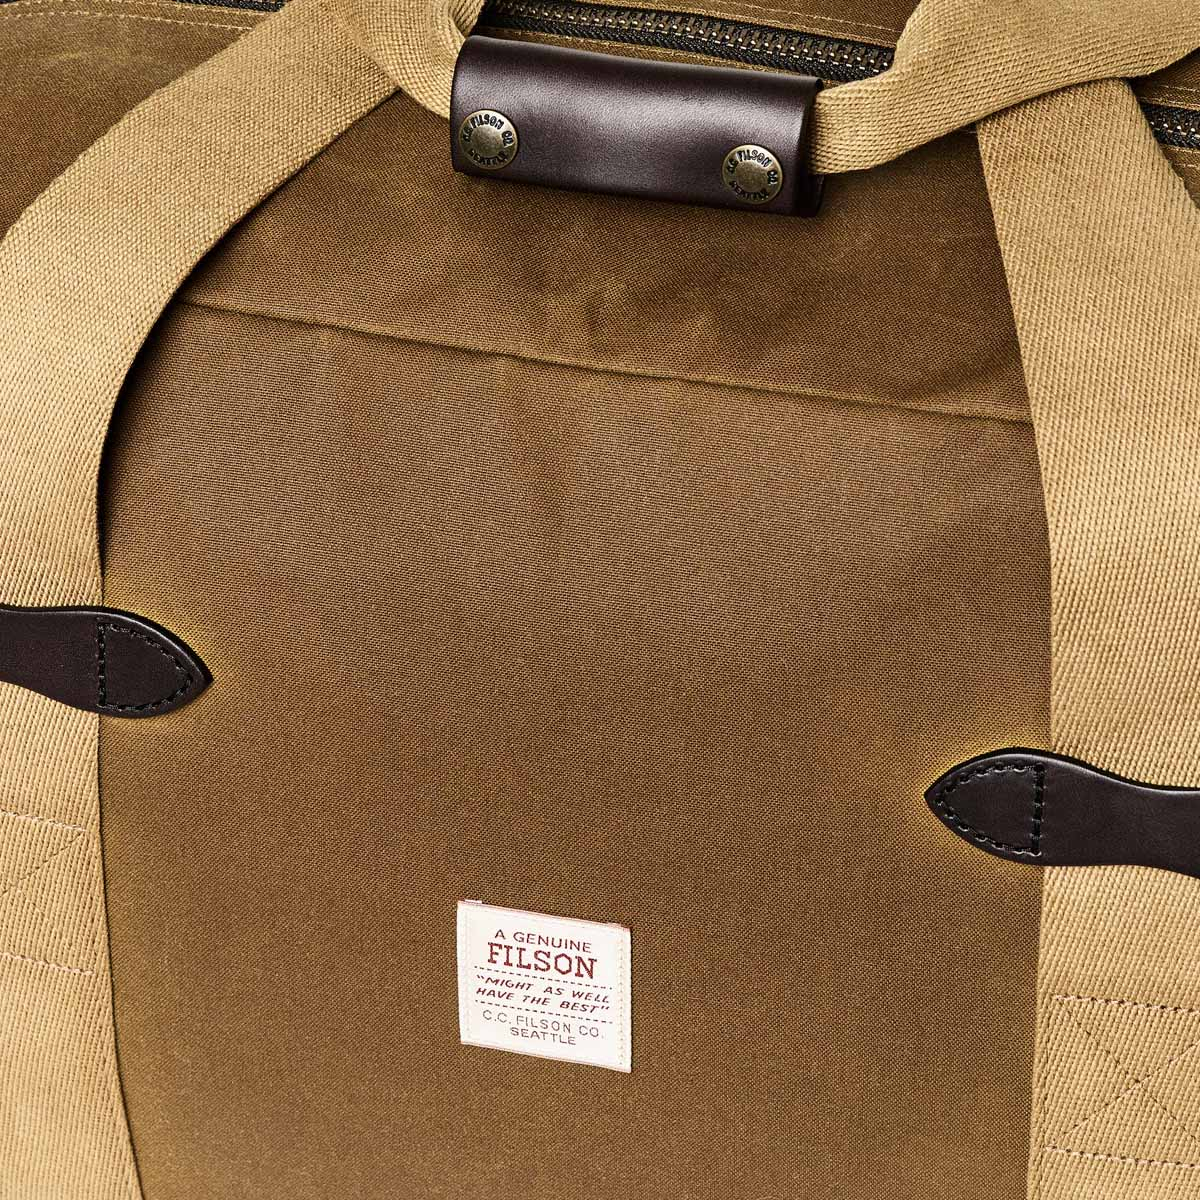 Filson Tin Cloth Medium Duffle Bag Dark Tan, perfect bag for a long weekend away